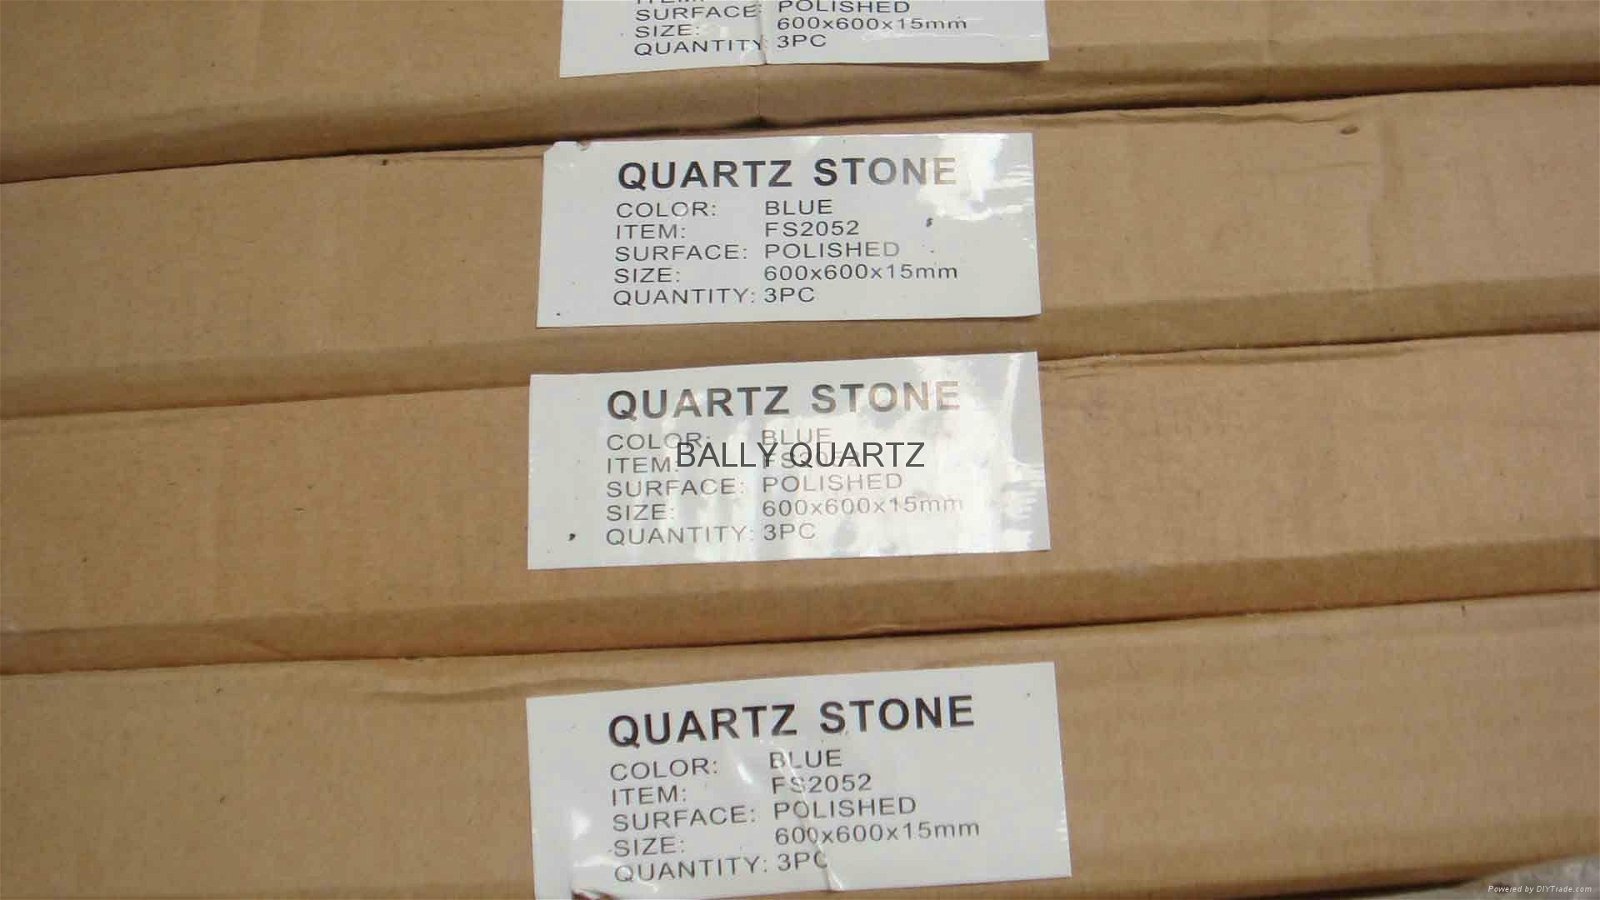 Cheap Natural Stone Quartz wall tiles and Quartz stone floor tiles 2